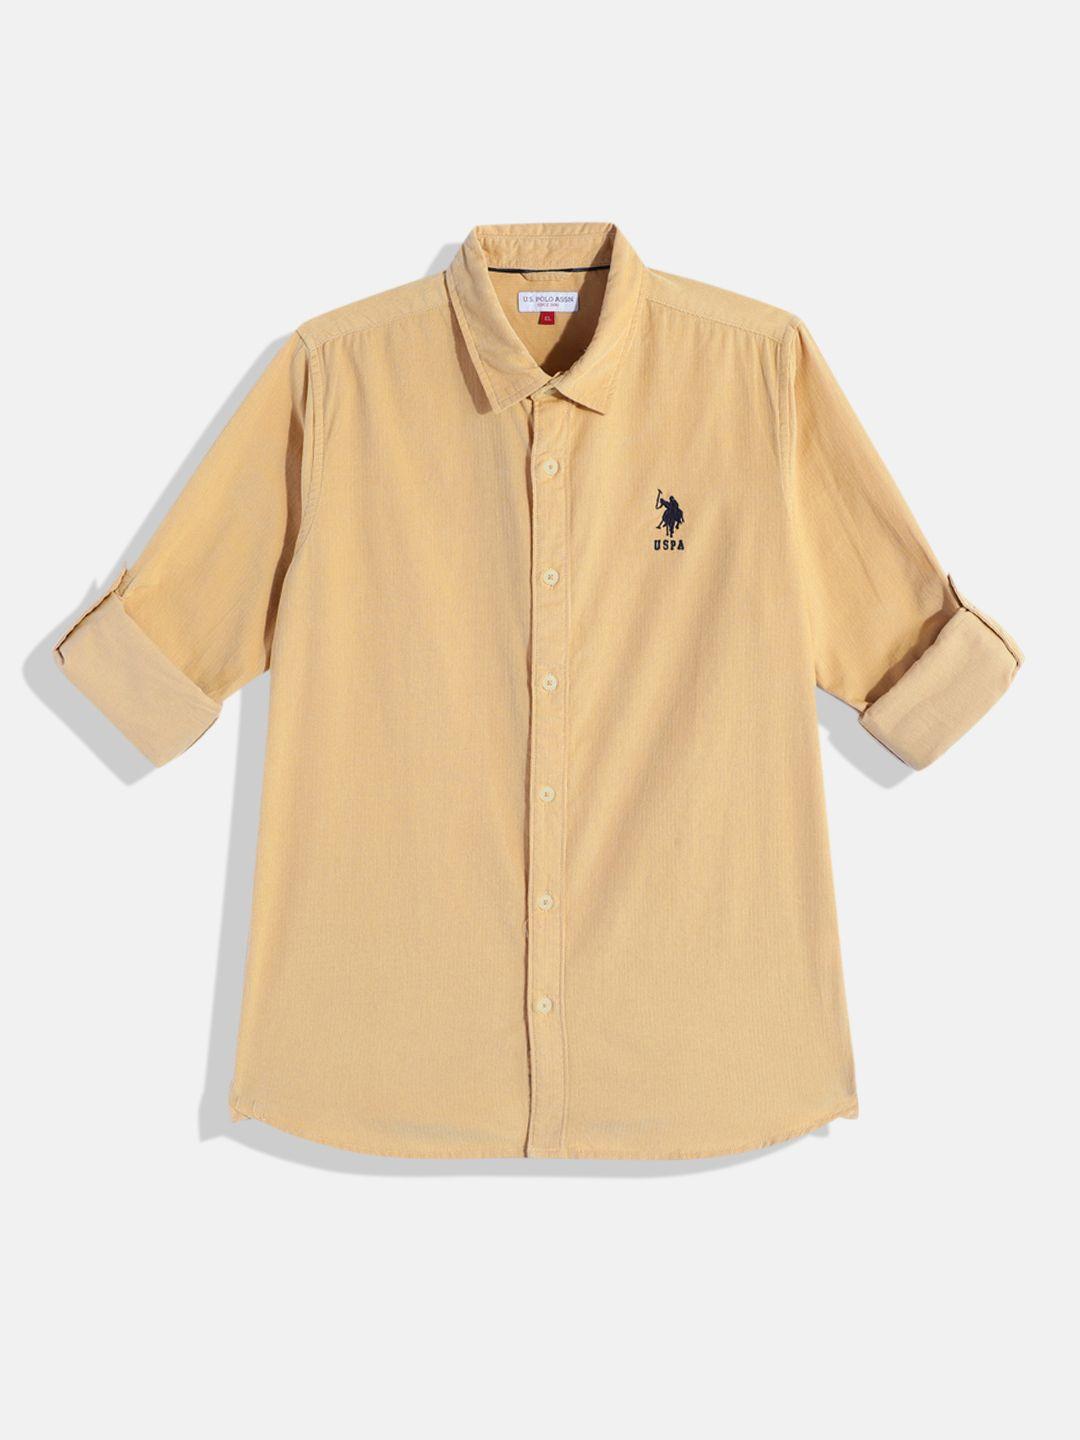 u.s. polo assn. kids boys corduroy pure cotton casual shirt